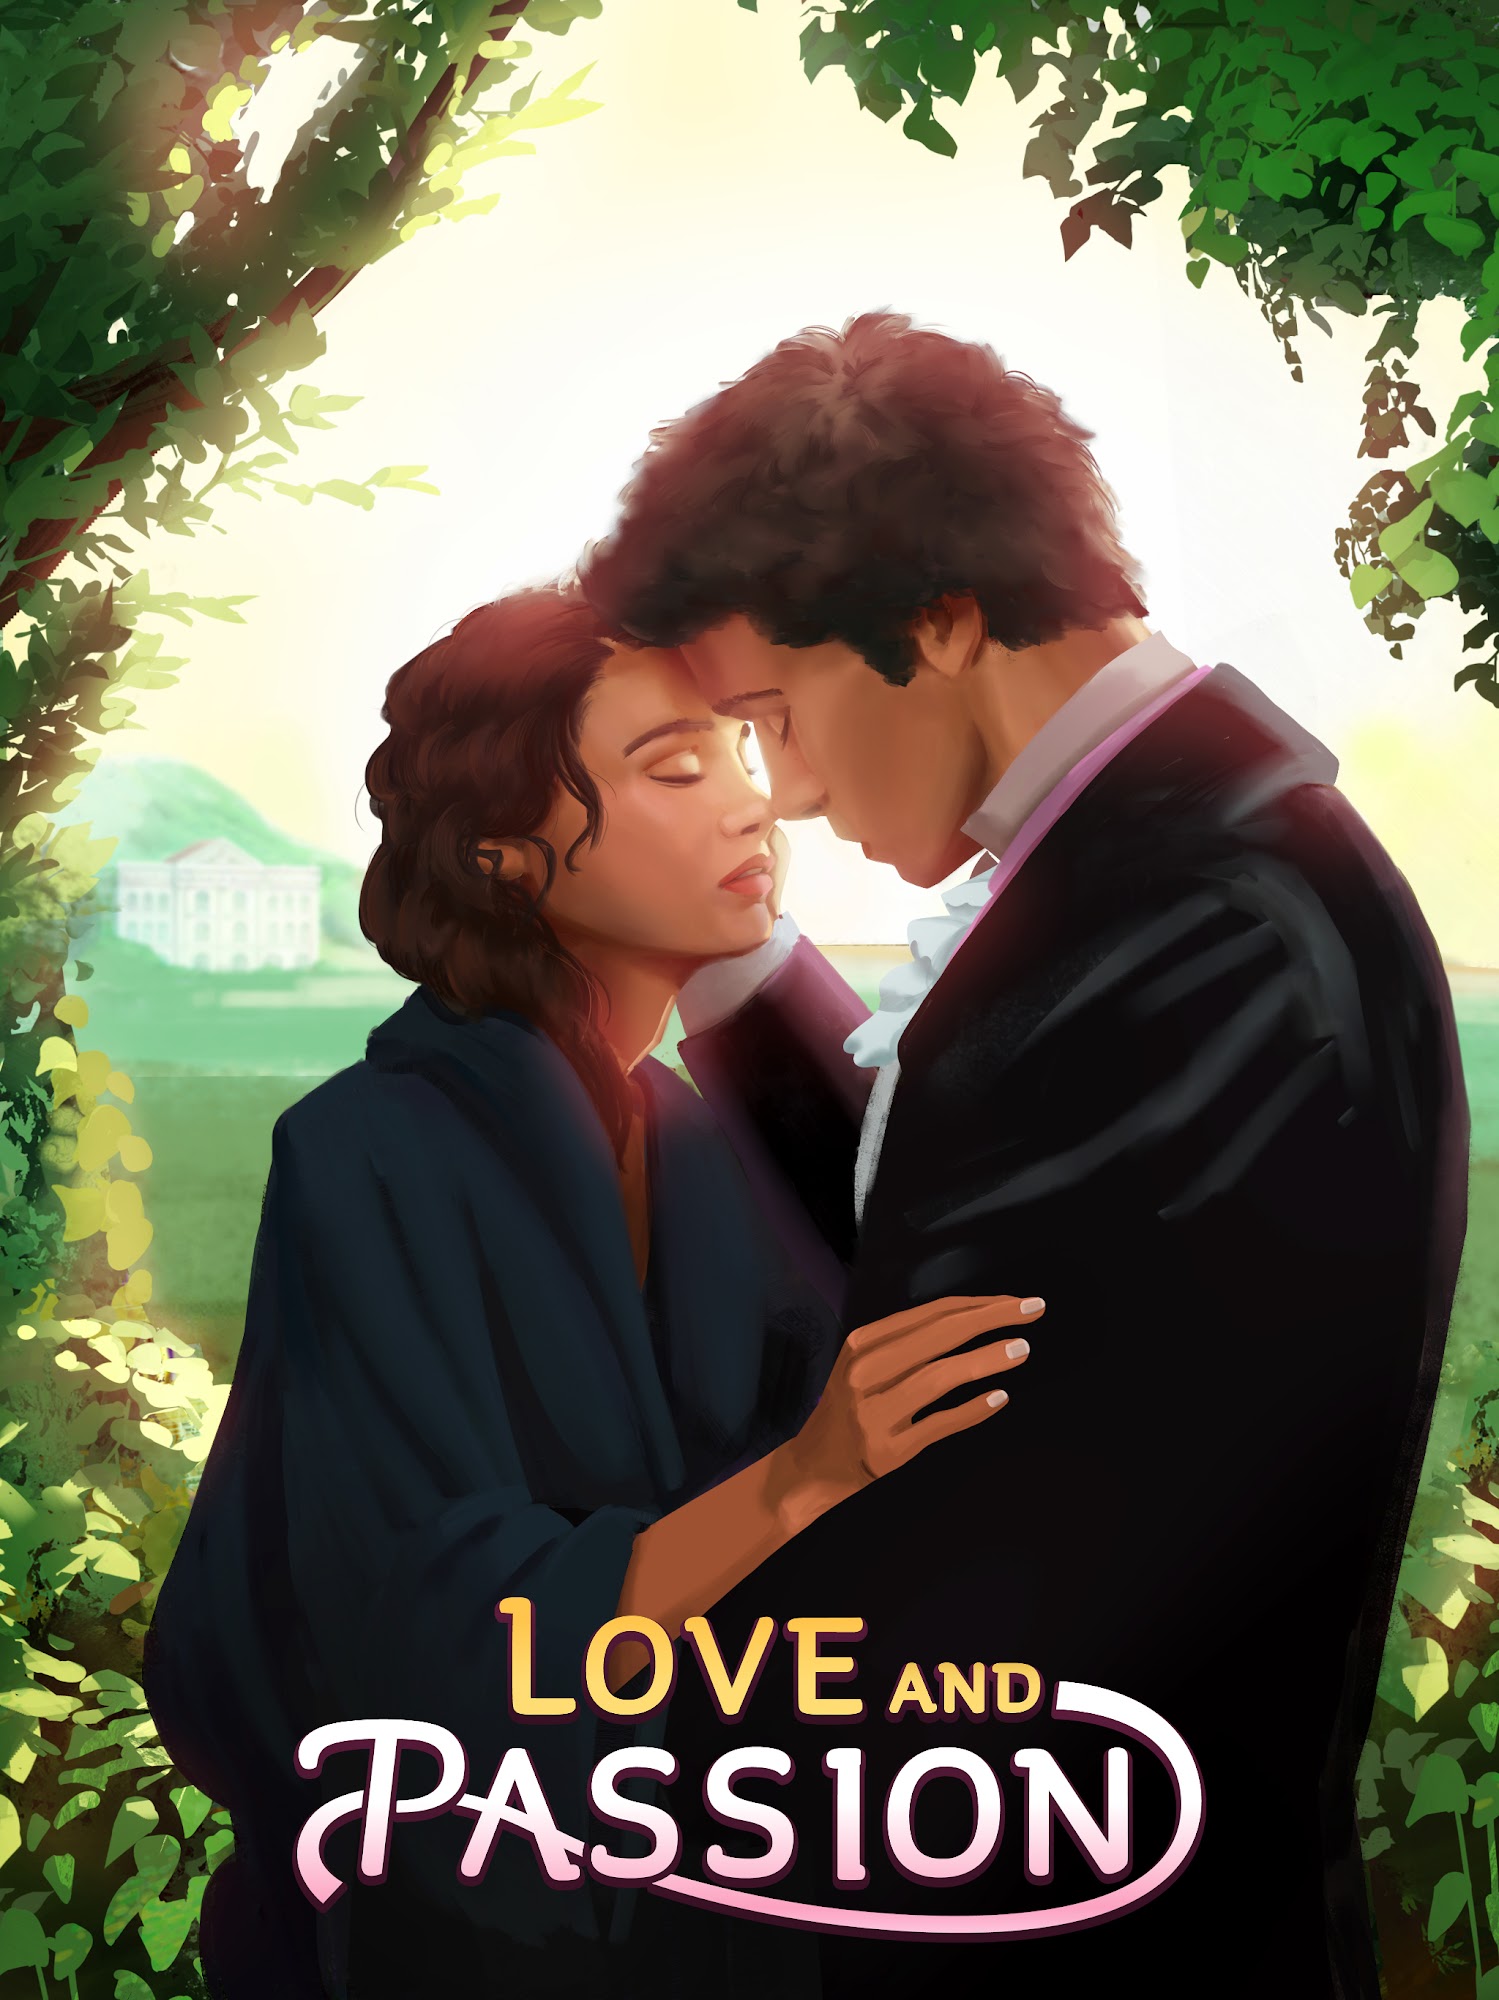 Download Love and Passion: Episodes für Android kostenlos.